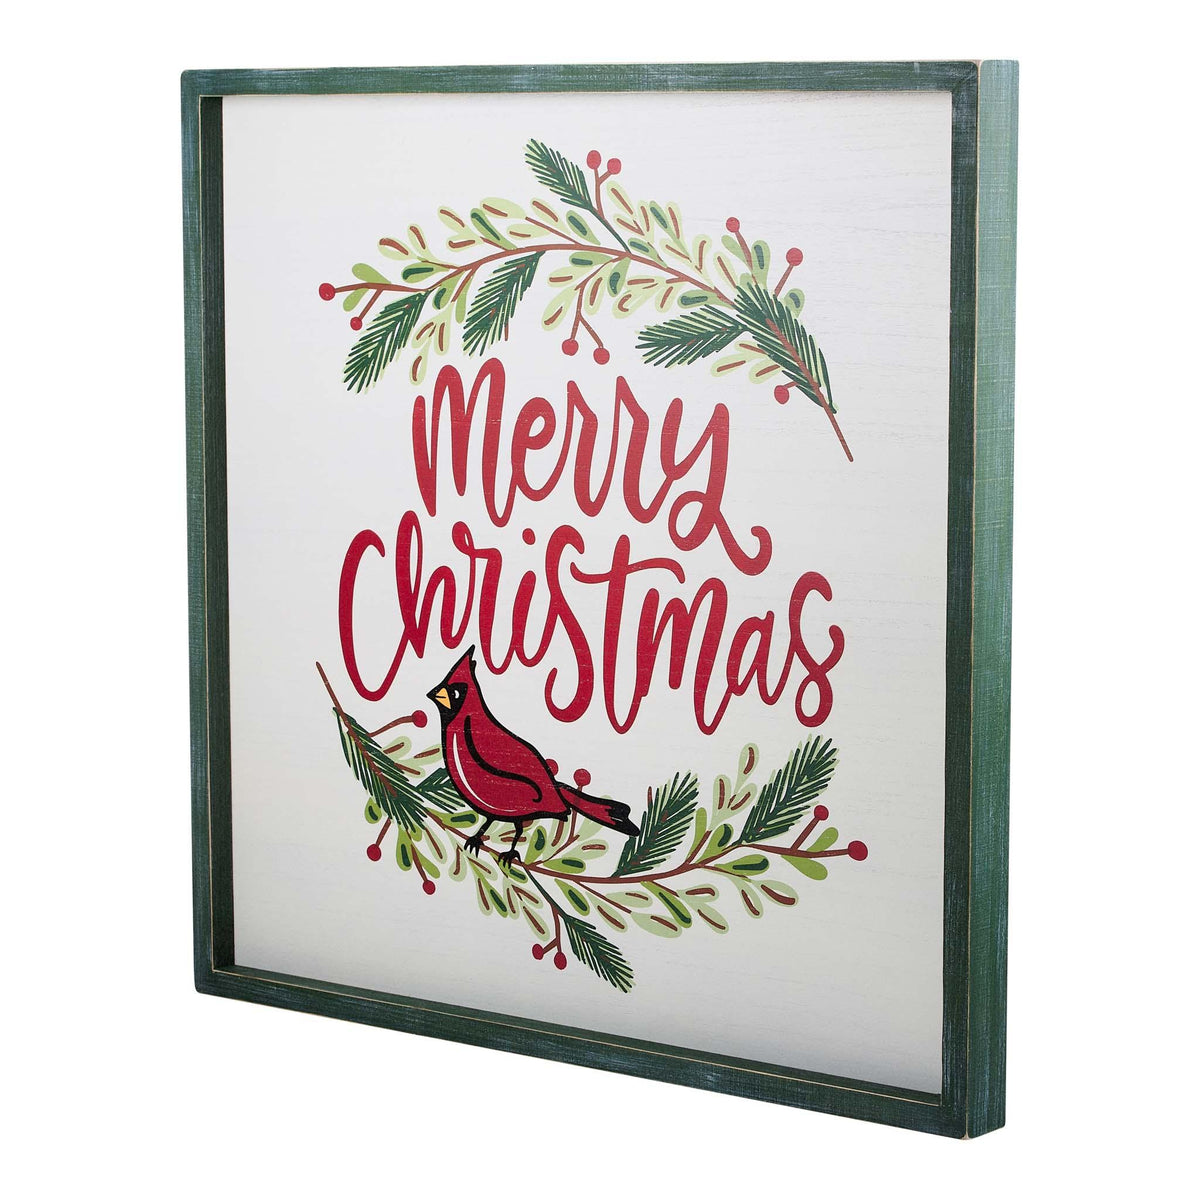 Merry Christmas Red Bird Wreath Framed Canvas - GLORY HAUS 